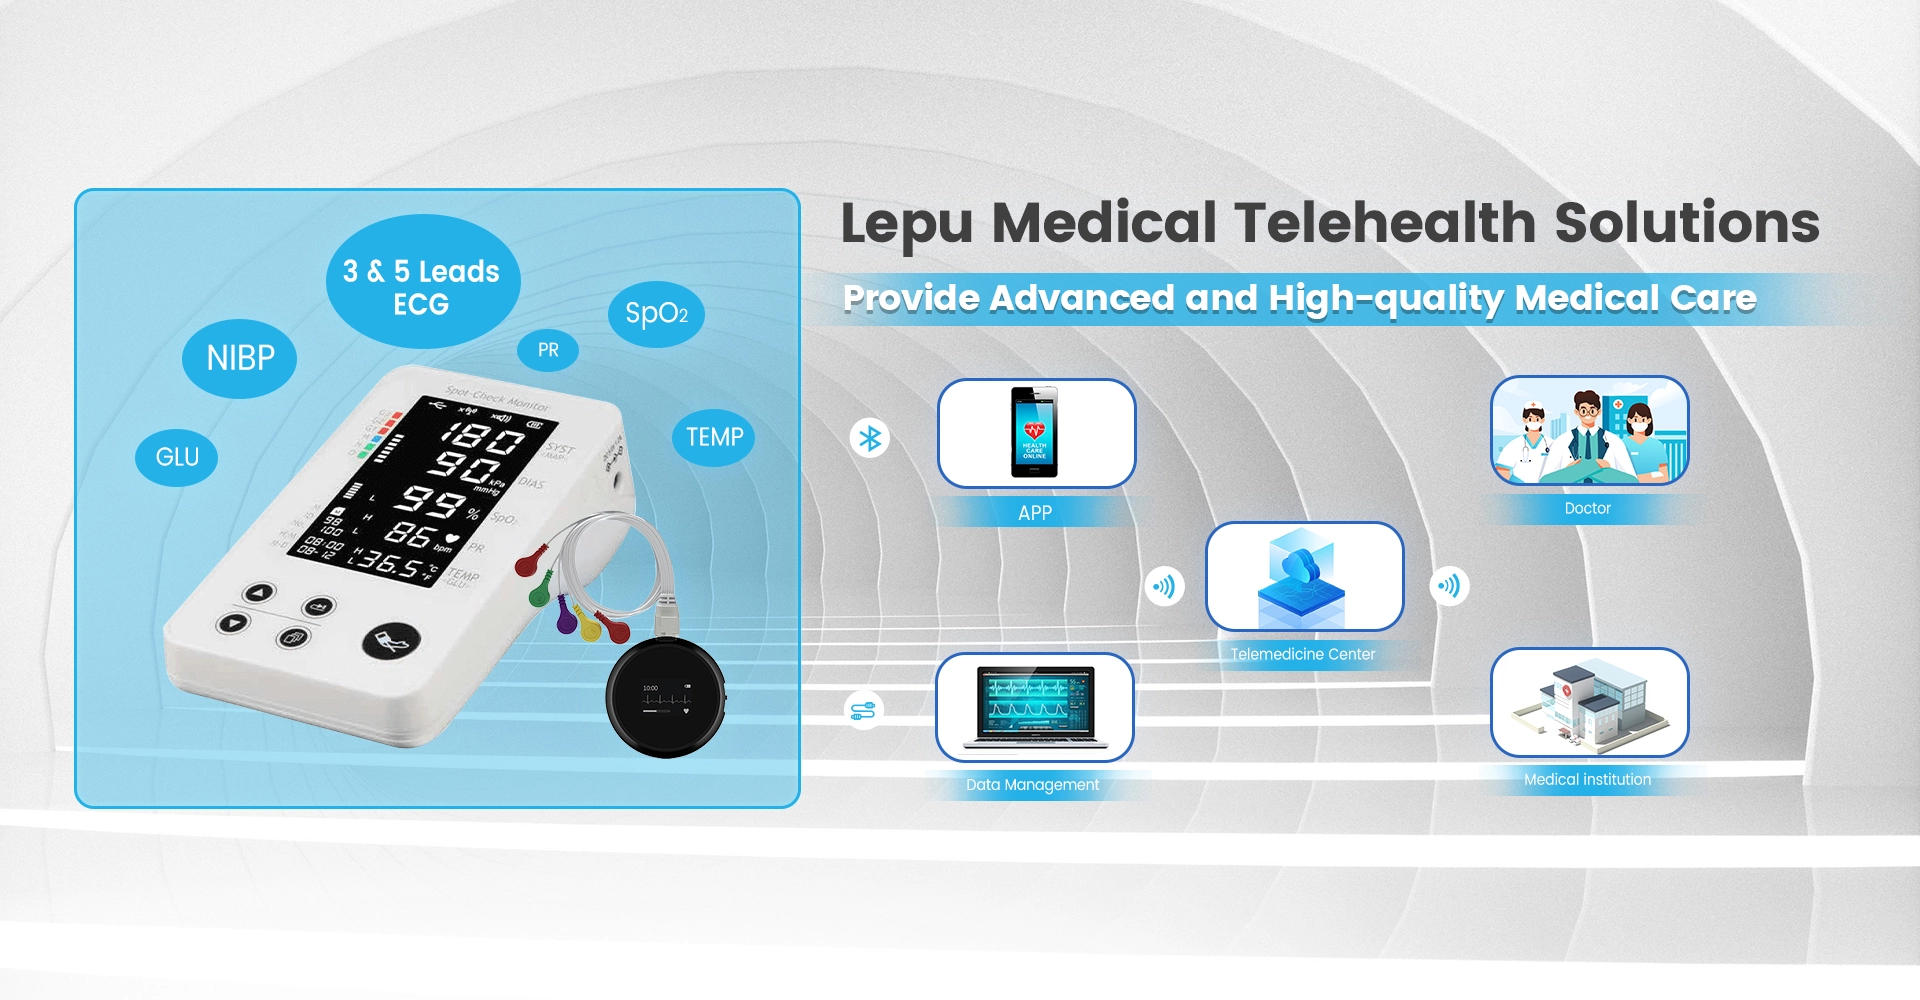 Lepu Medical Telehealth Solutions